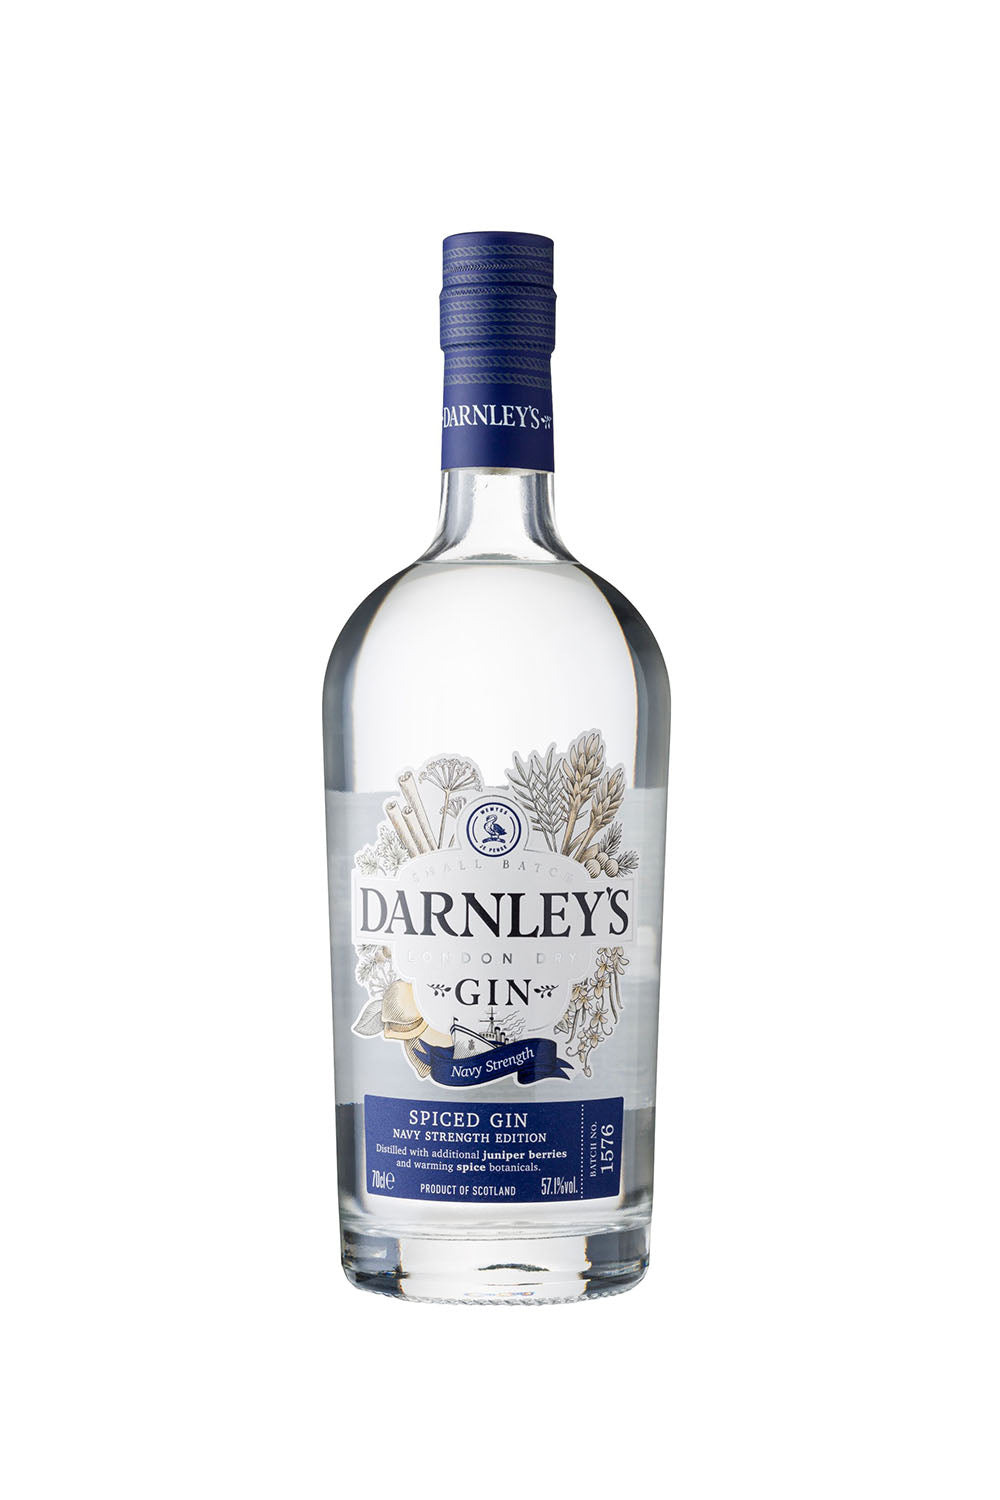 Darnley's Gin, Small Batch Scottish Gin - Navy Strength